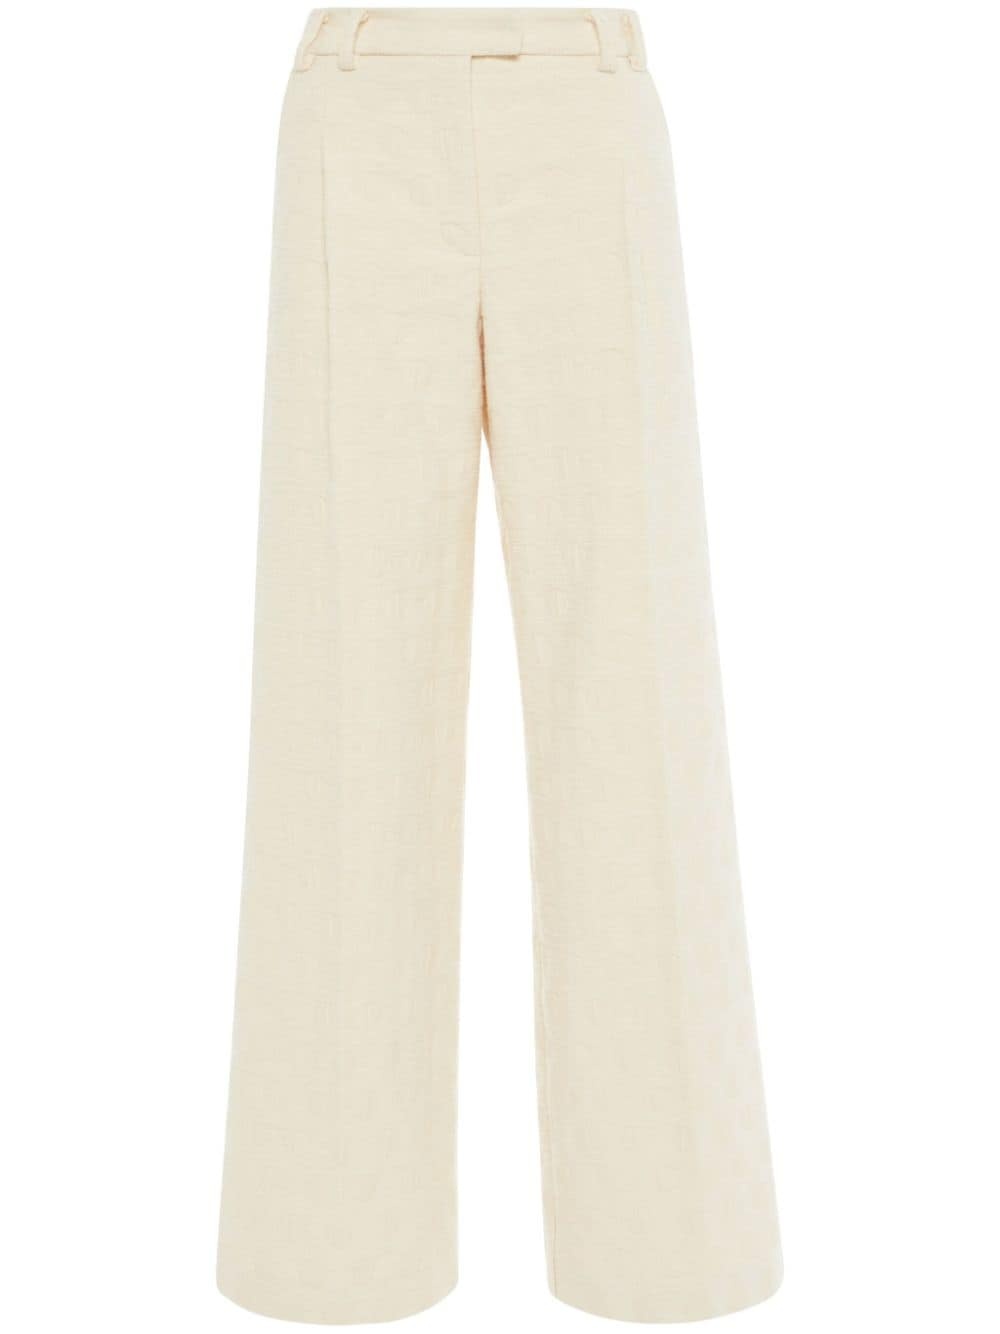 La Comasca jacquard trousers - 1